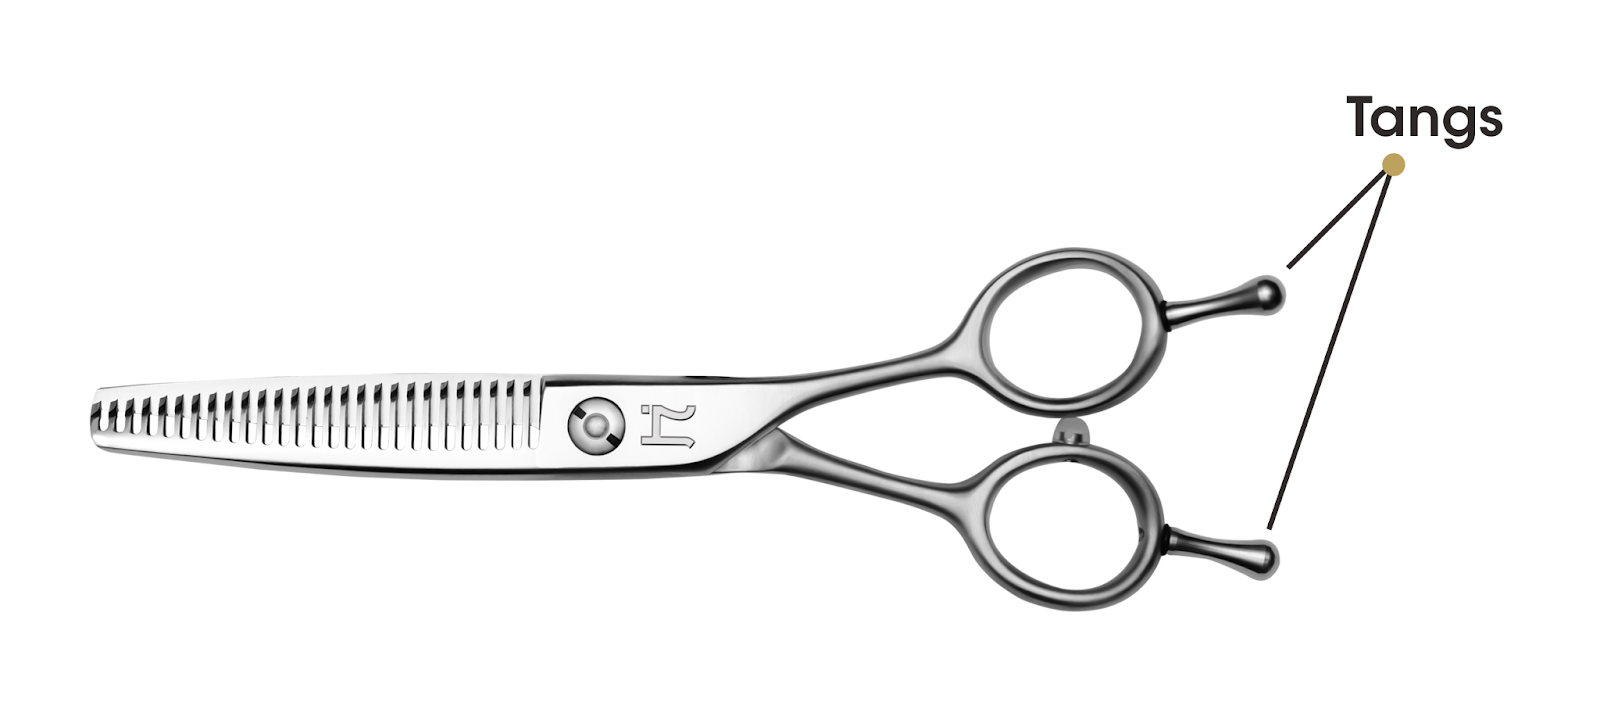 tangs or finger rest part of the scissor